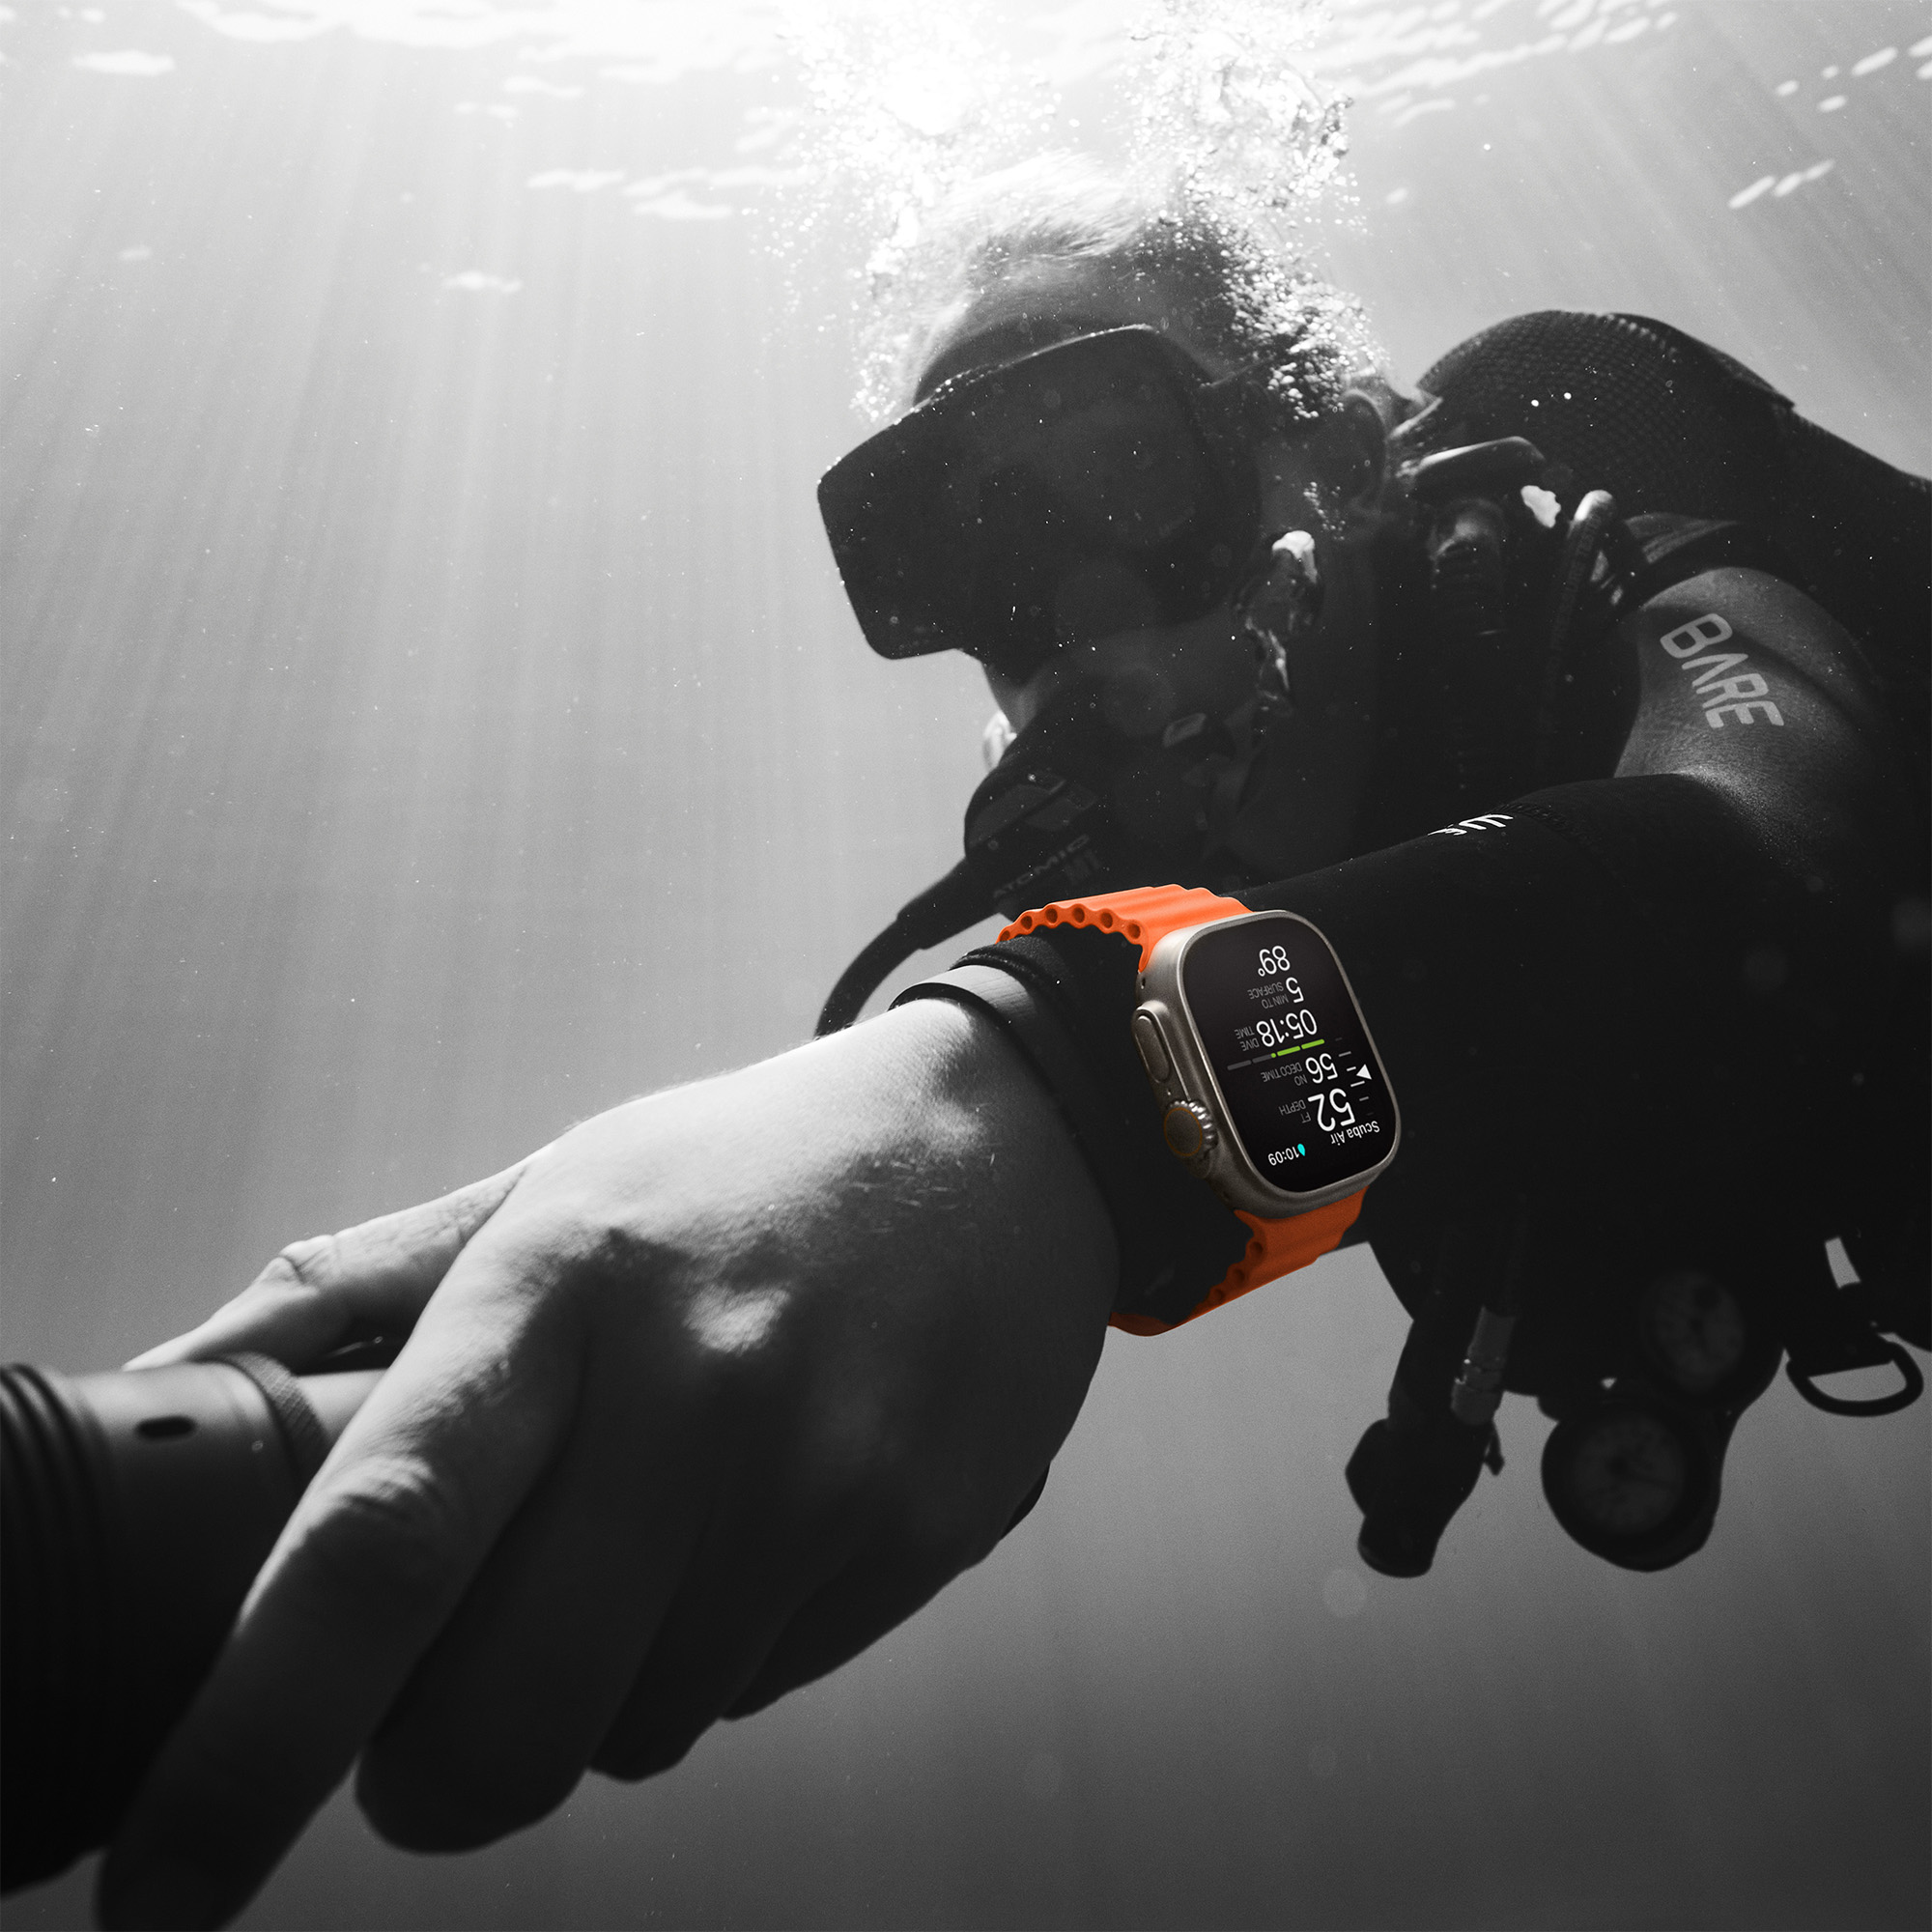 Apple Watch Ultra2 Cellular, 49mm Titanium Case w Orange Ocean Band